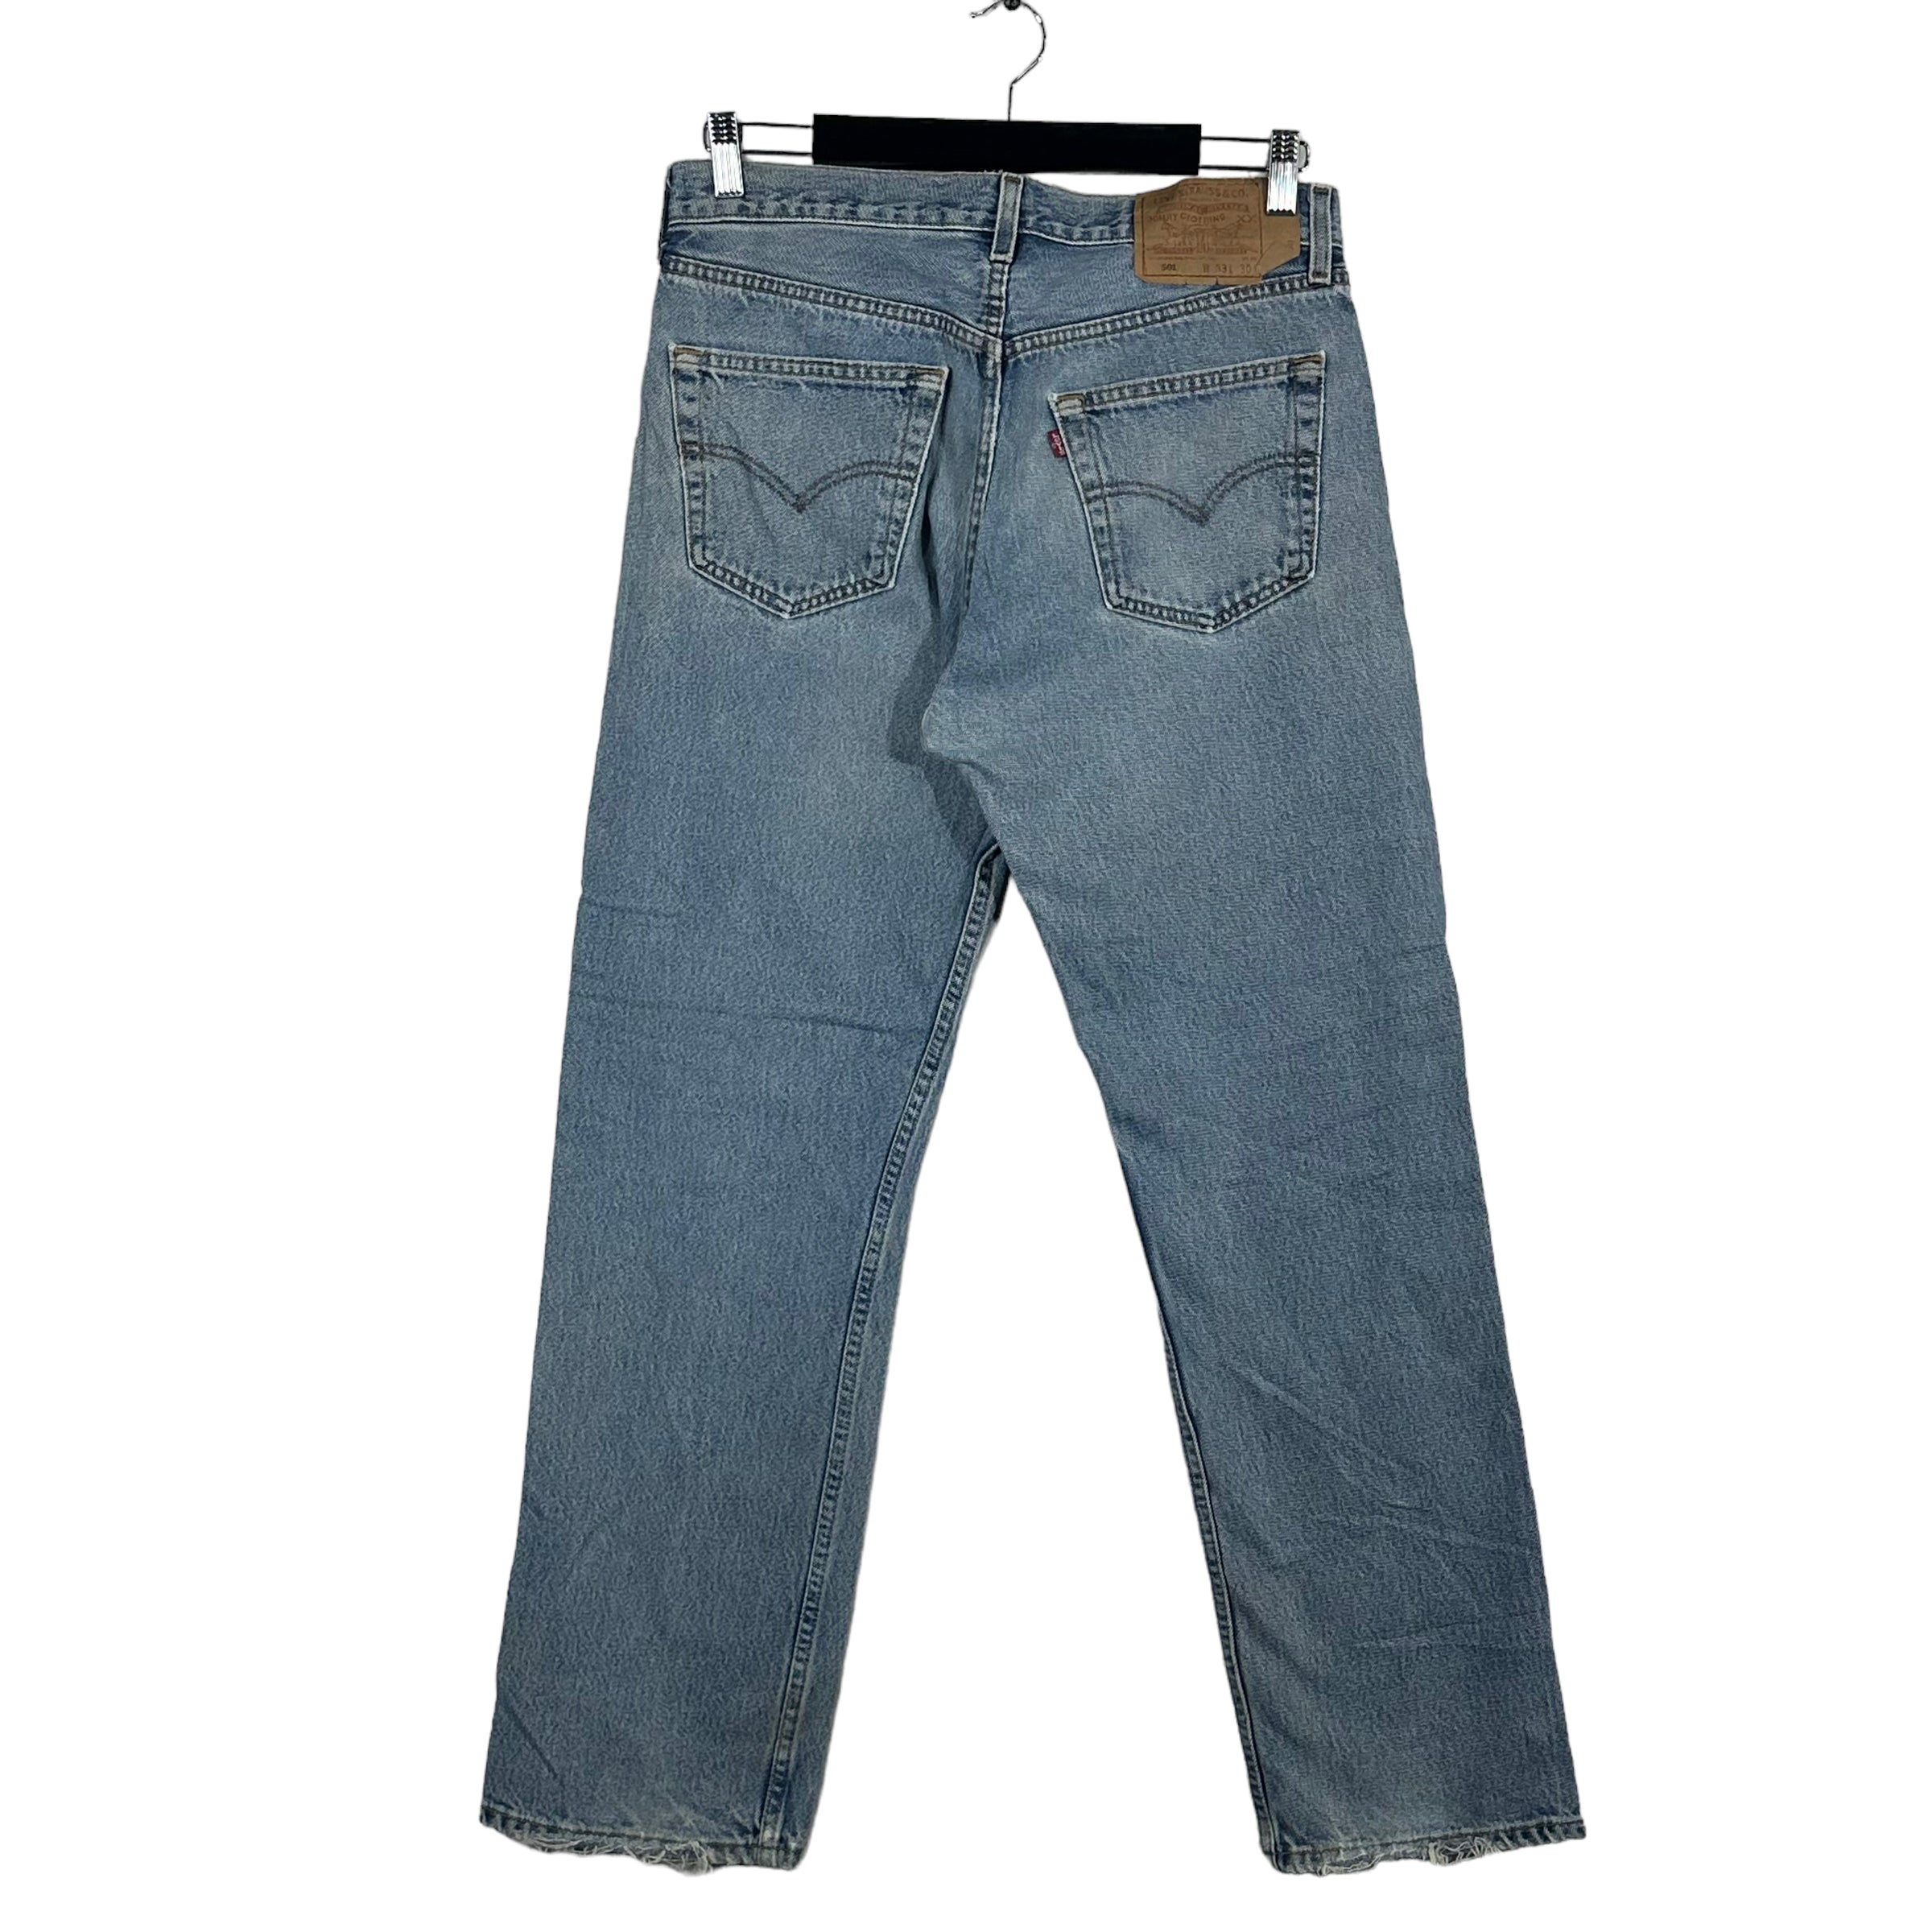 Vintage Levi's 501 Light Wash Straight Leg Distressed Denim Jeans